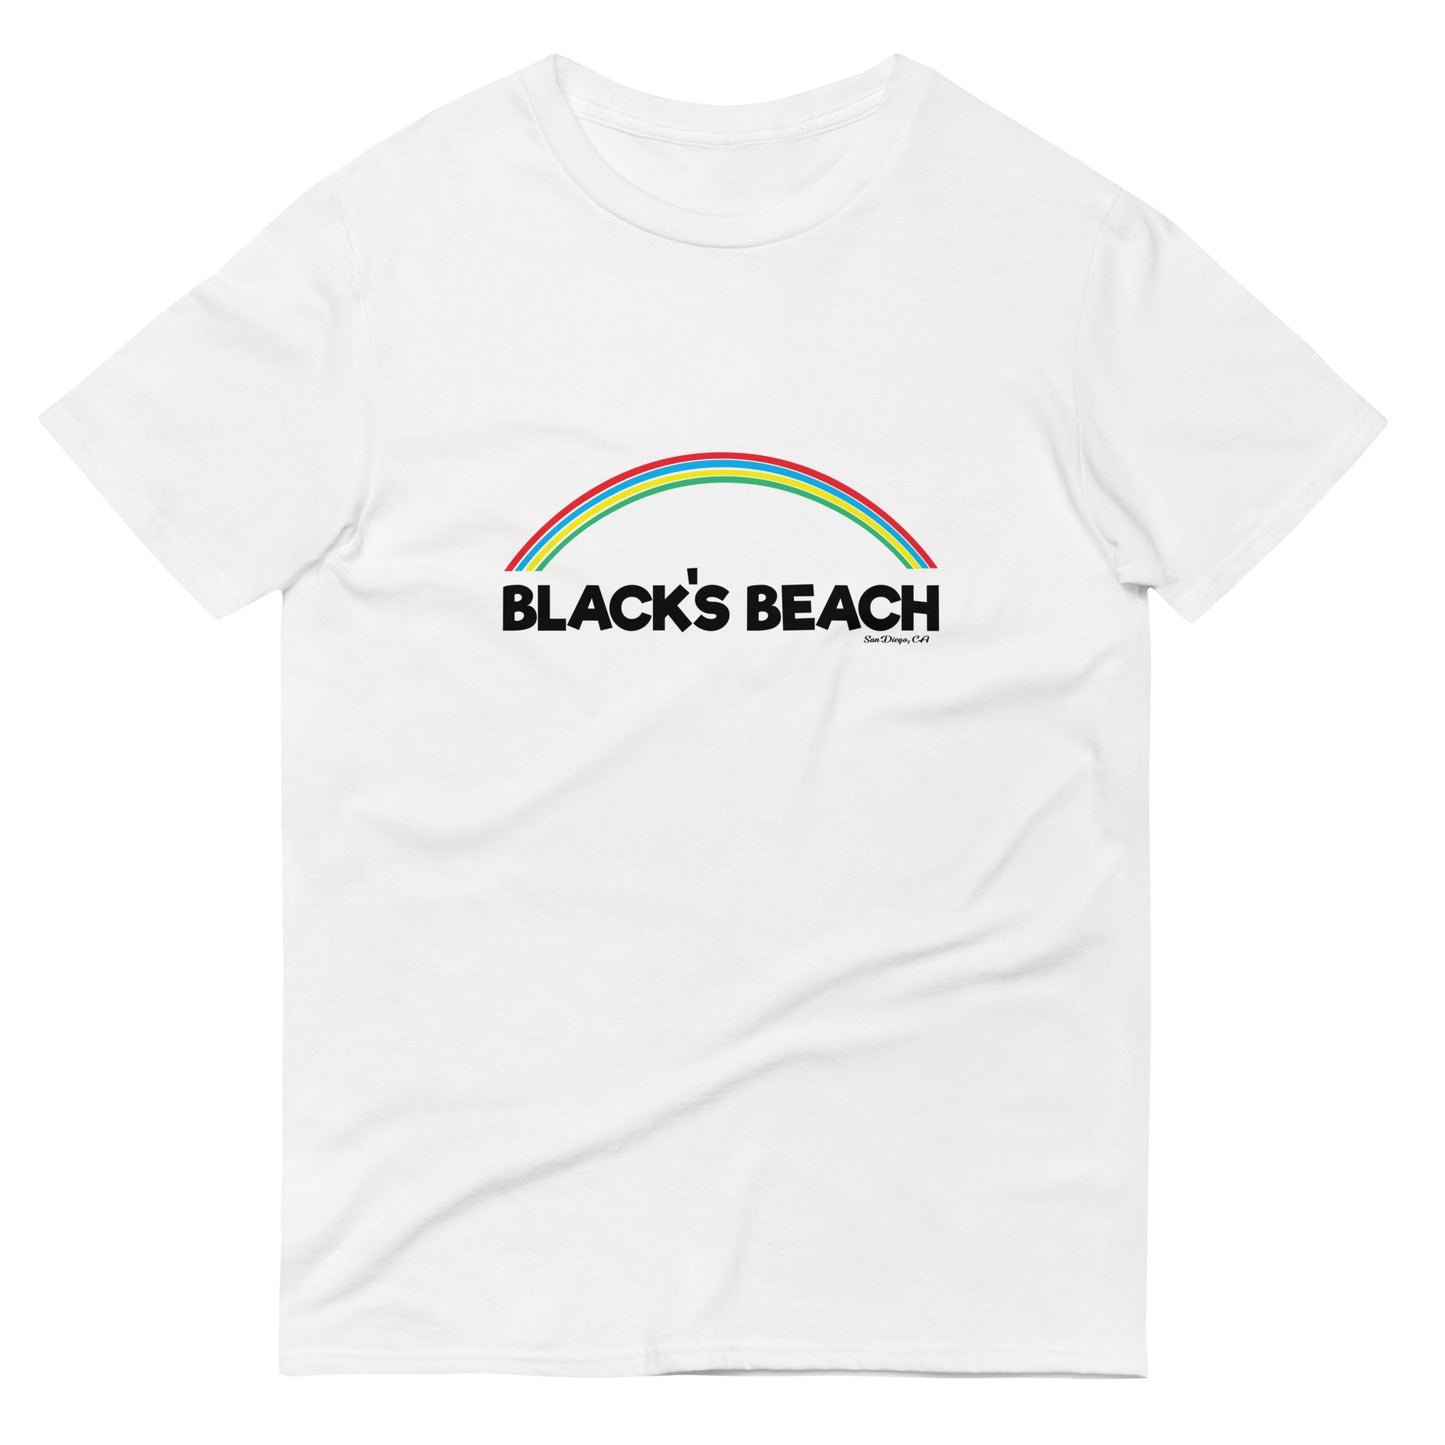 Black's Beach Tees / Style 09 / Short-Sleeve T-Shirt